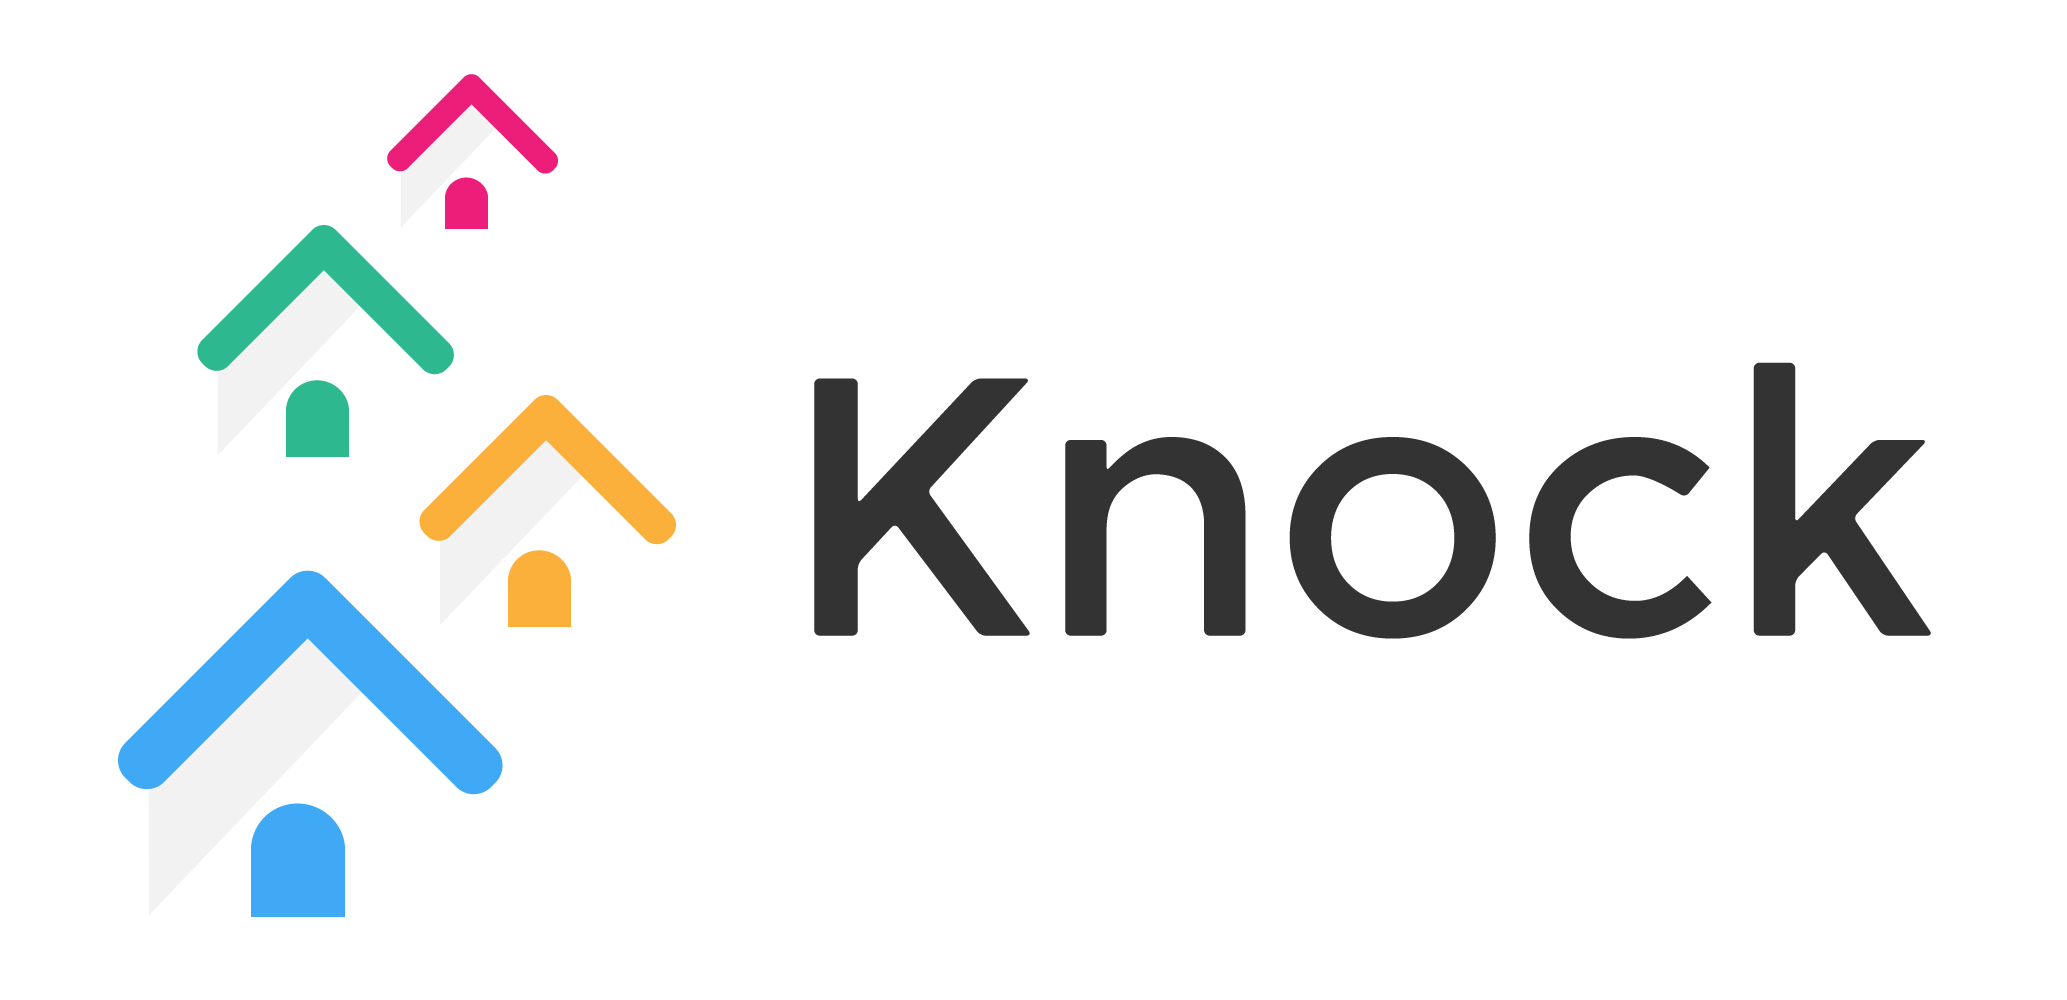 New Technology Platform, Knock, Named LPC's December Marketing Partner of the Month!